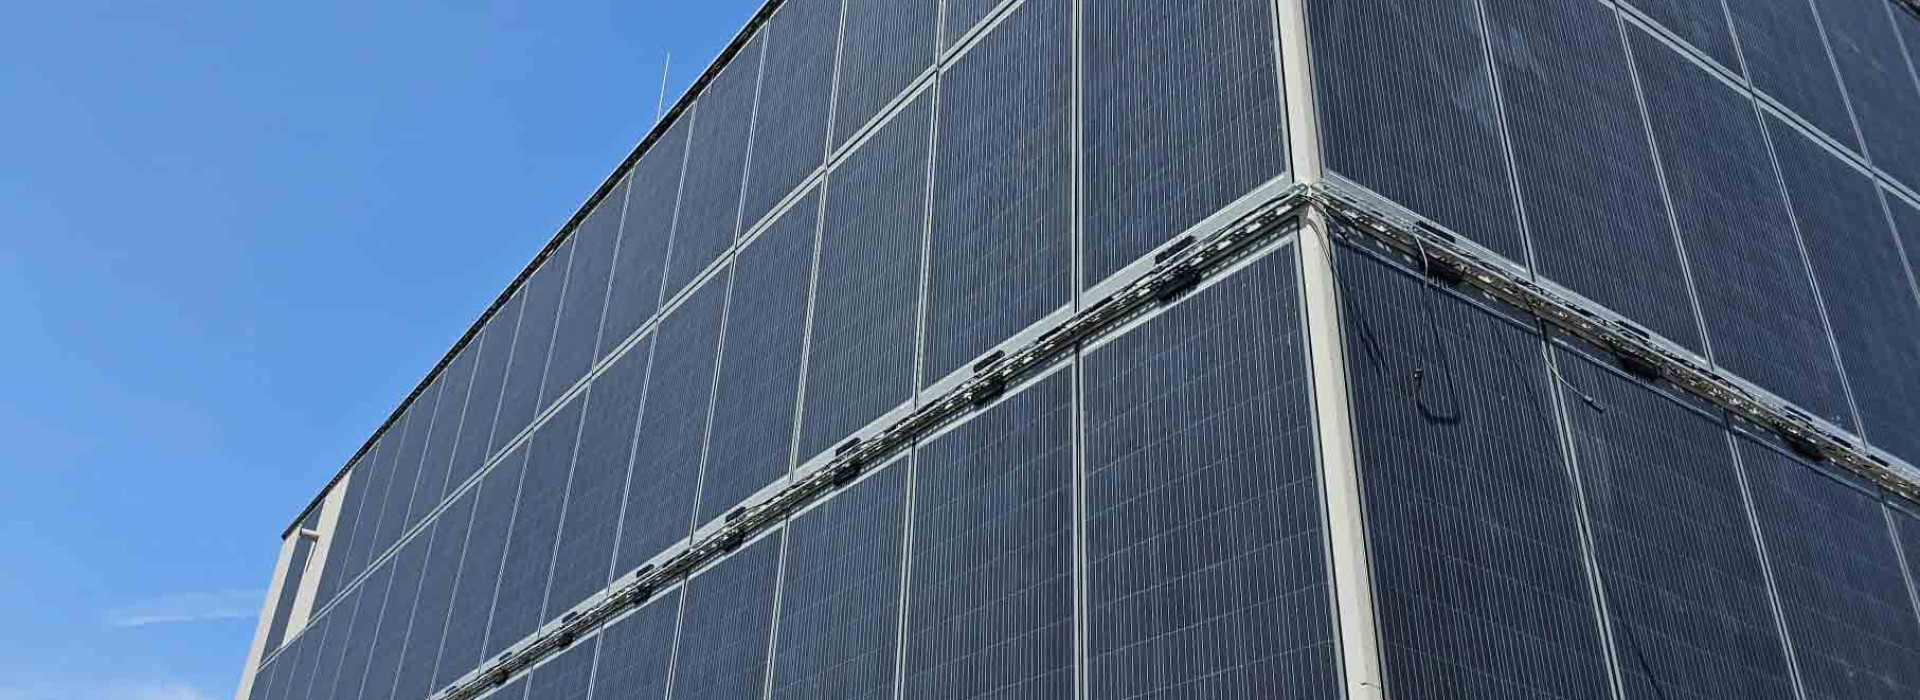 125 kW solar facade for Star Movie Steyr